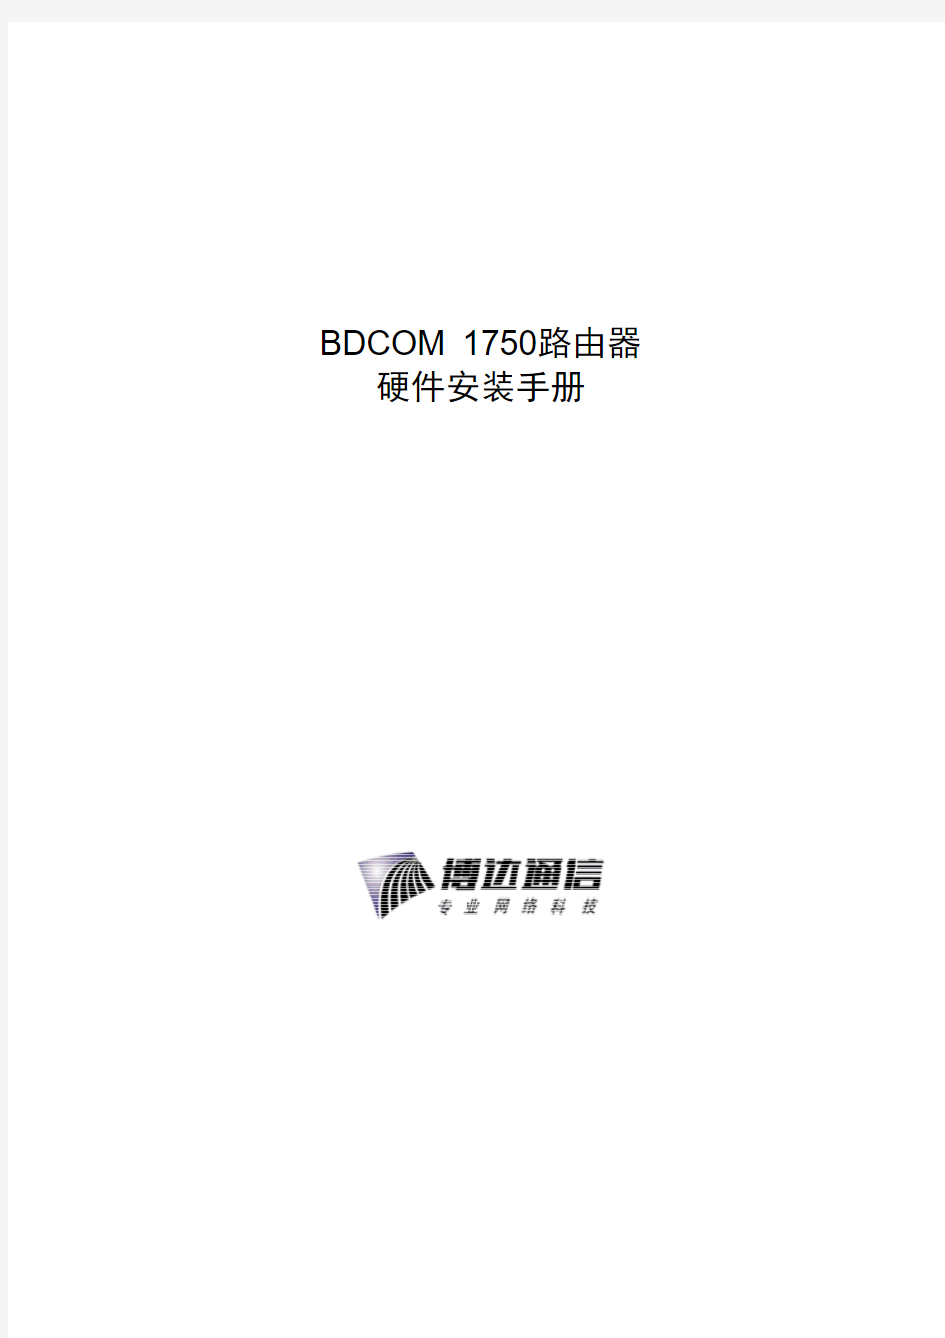 BDCOM 1750 路由器硬件安装手册